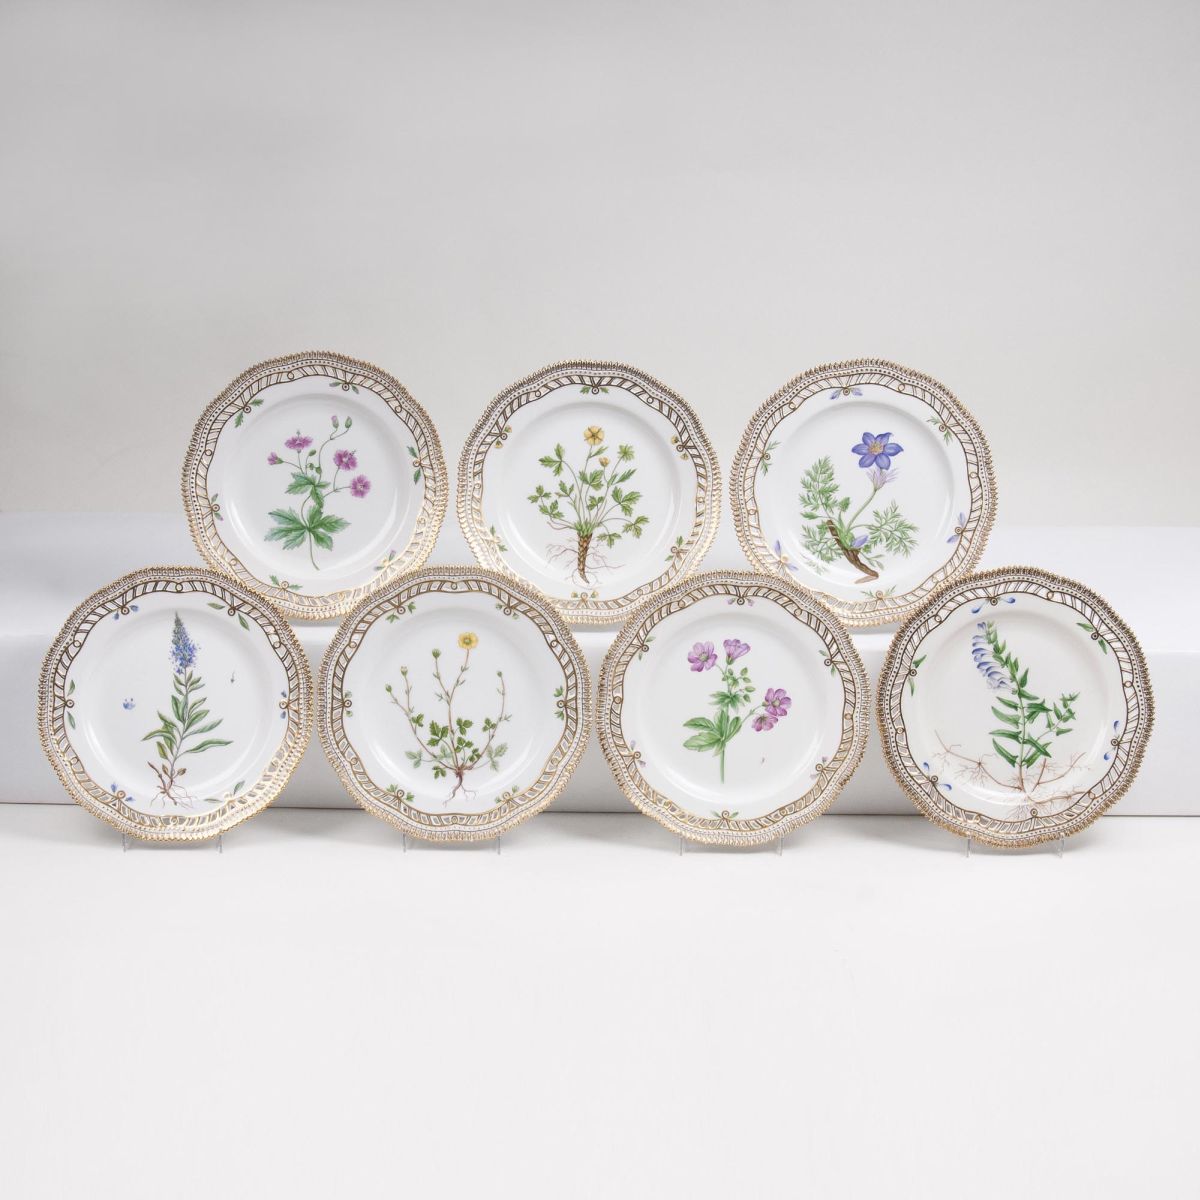 A Set of 6 reticulated Flora Danica Plates with Botanical Specimens